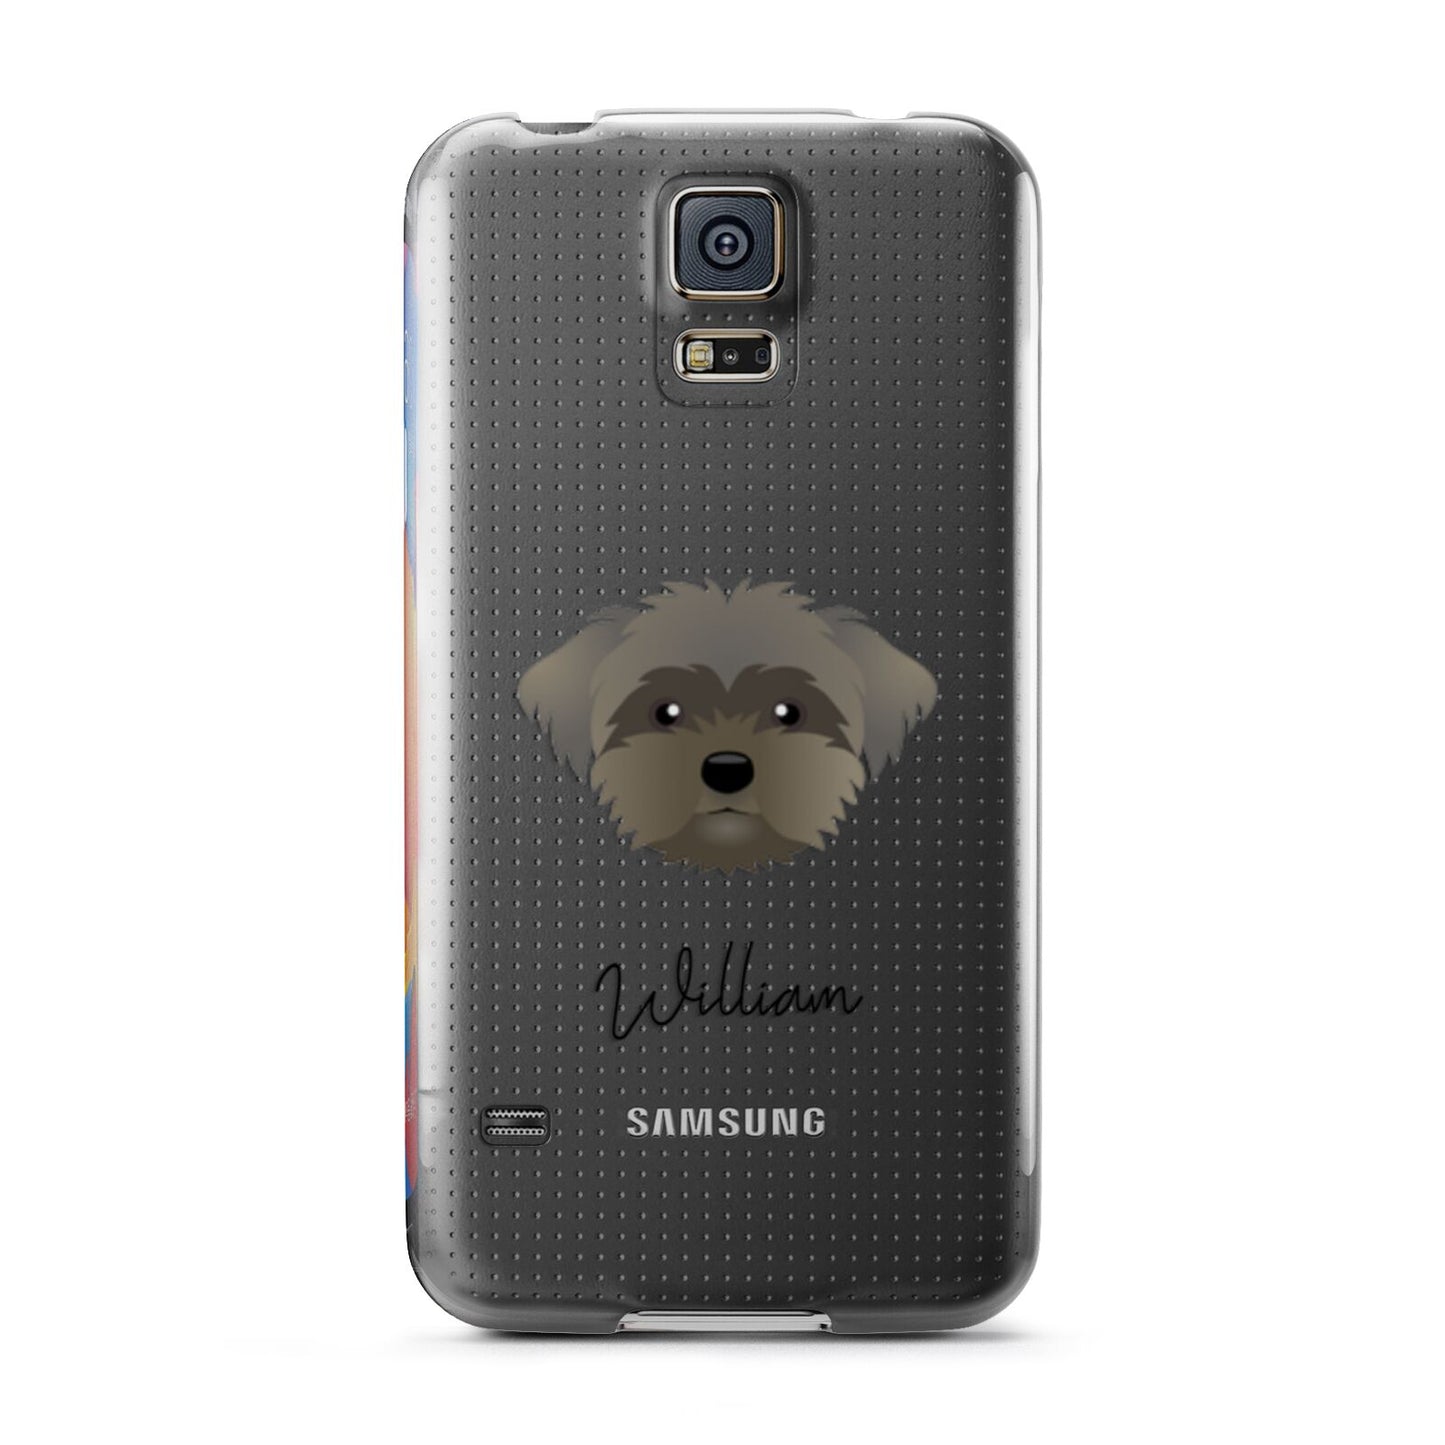 Peek a poo Personalised Samsung Galaxy S5 Case